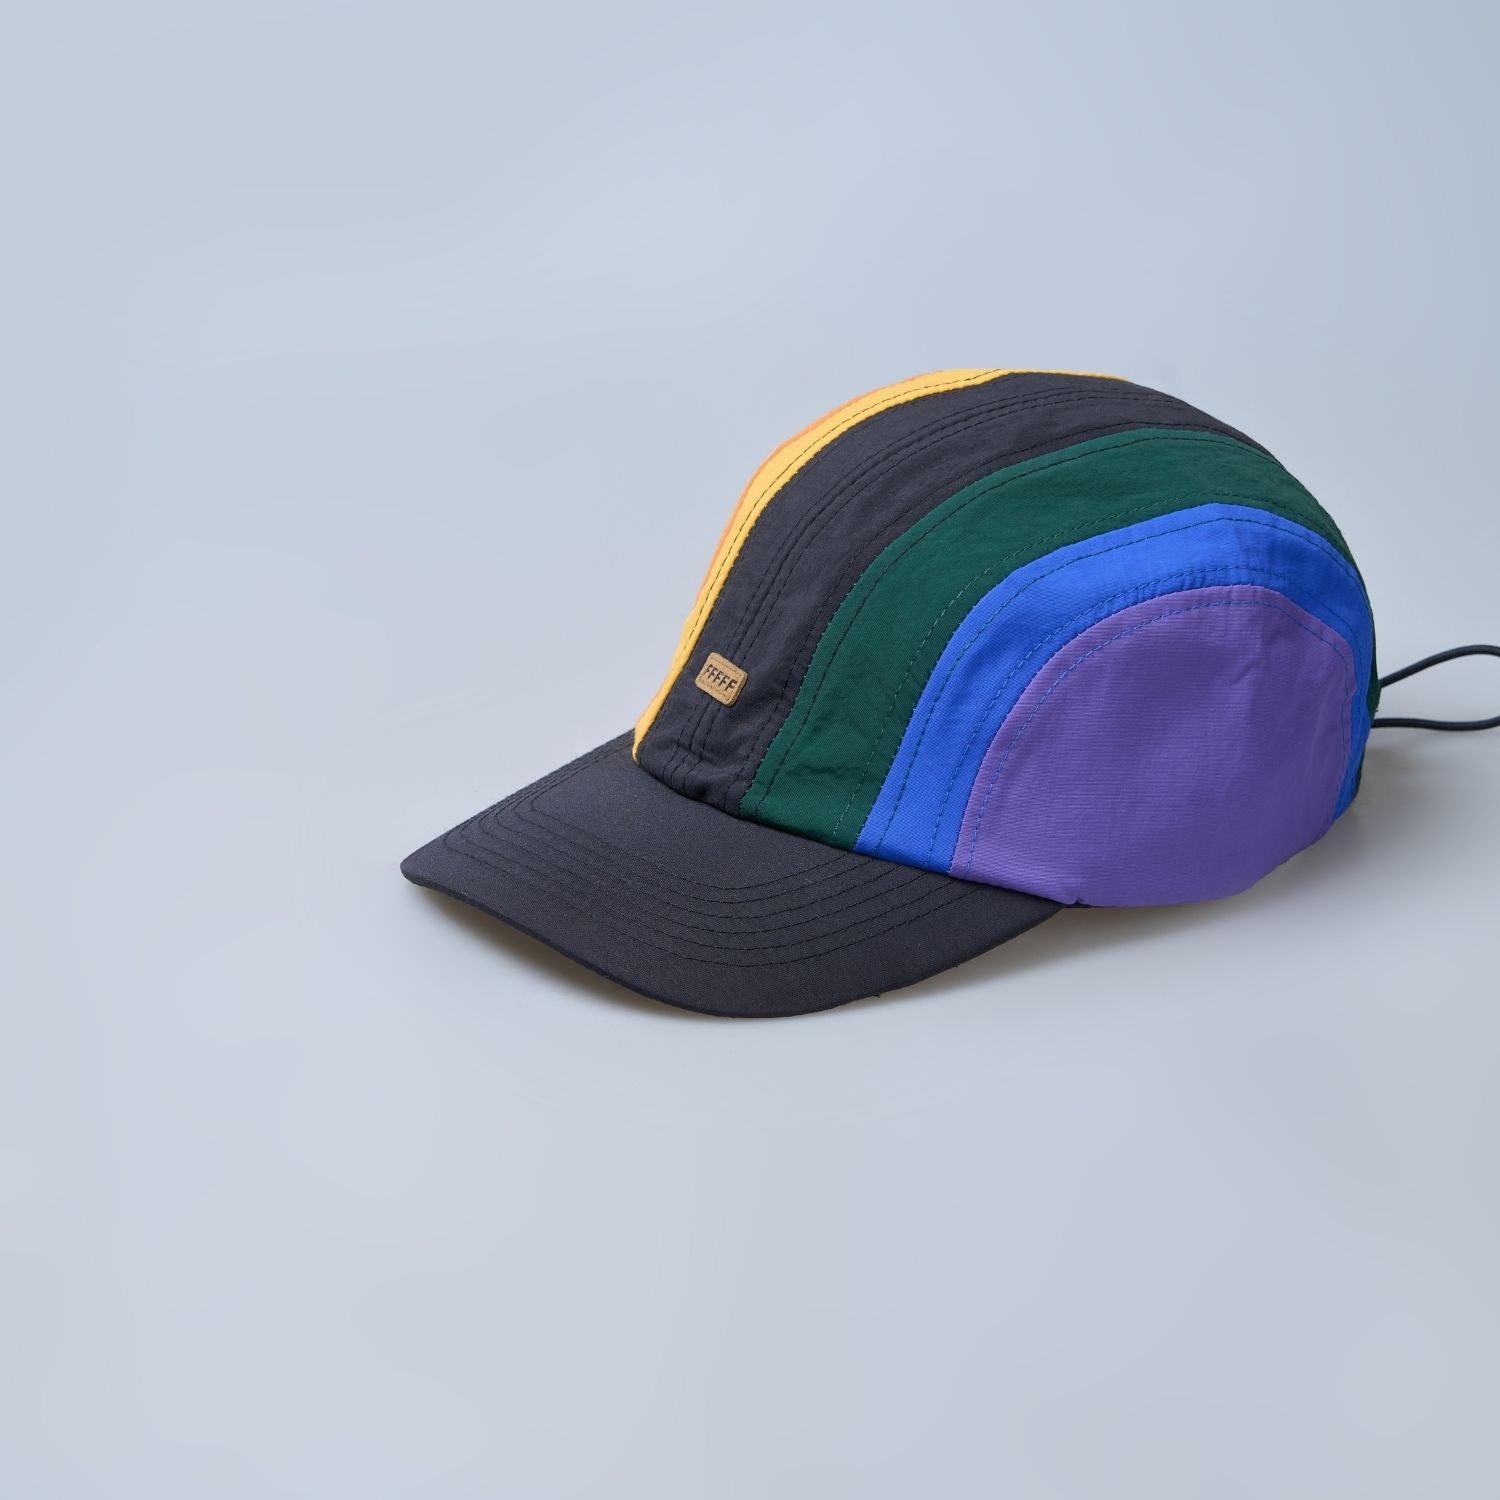 Multi colored, wide brim cap for men with adjustable strap.